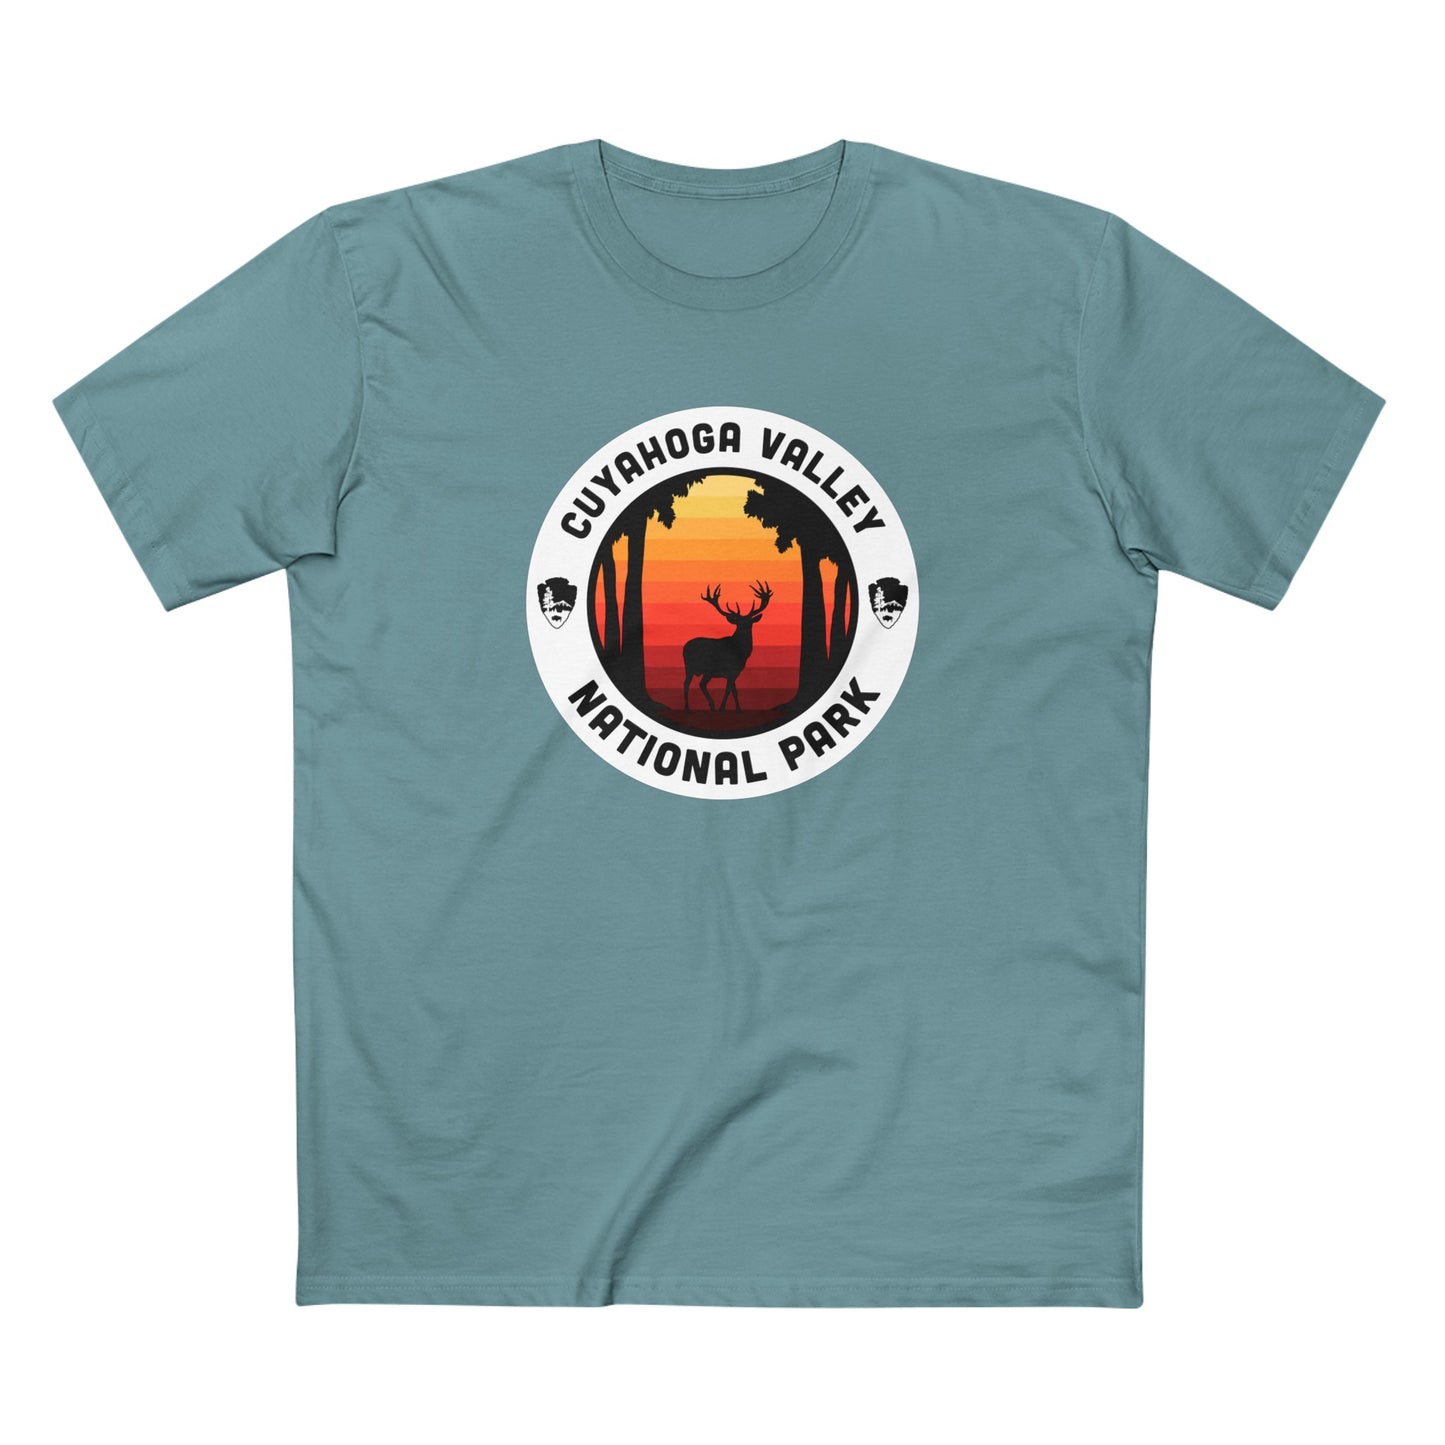 Cuyahoga Valley National Park T-Shirt - Round Badge Design